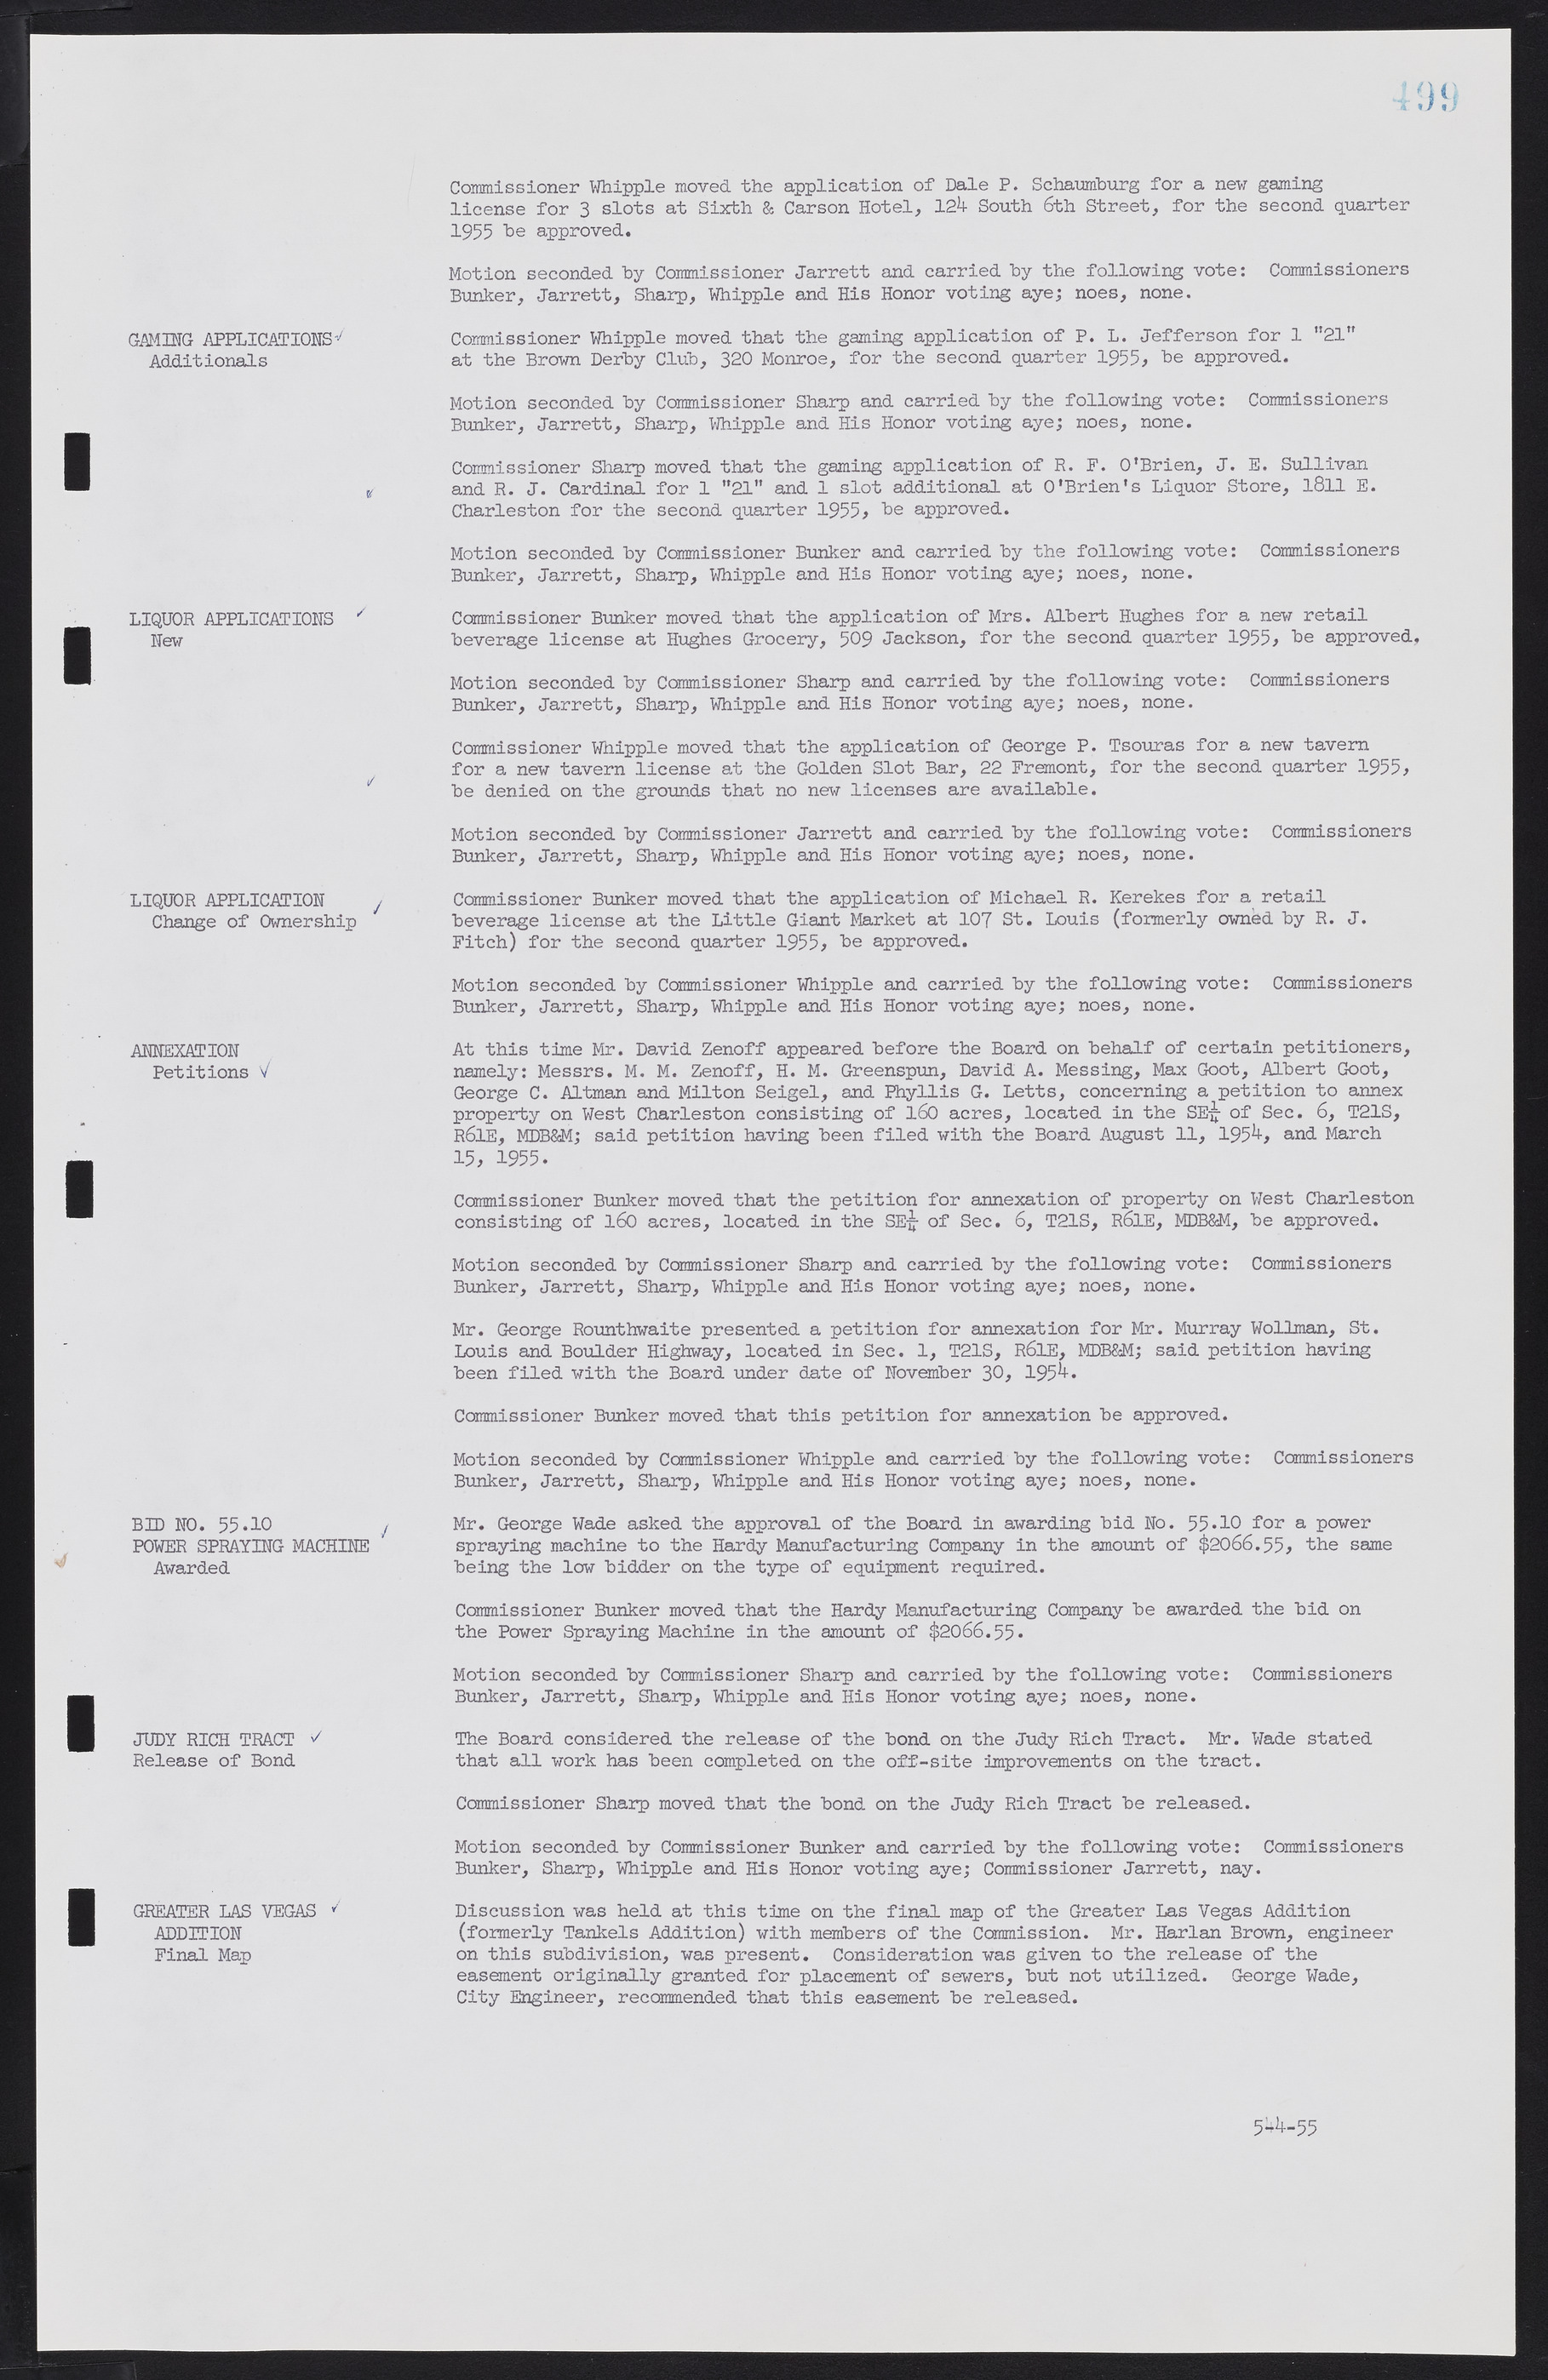 Las Vegas City Commission Minutes, February 17, 1954 to September 21, 1955, lvc000009-505